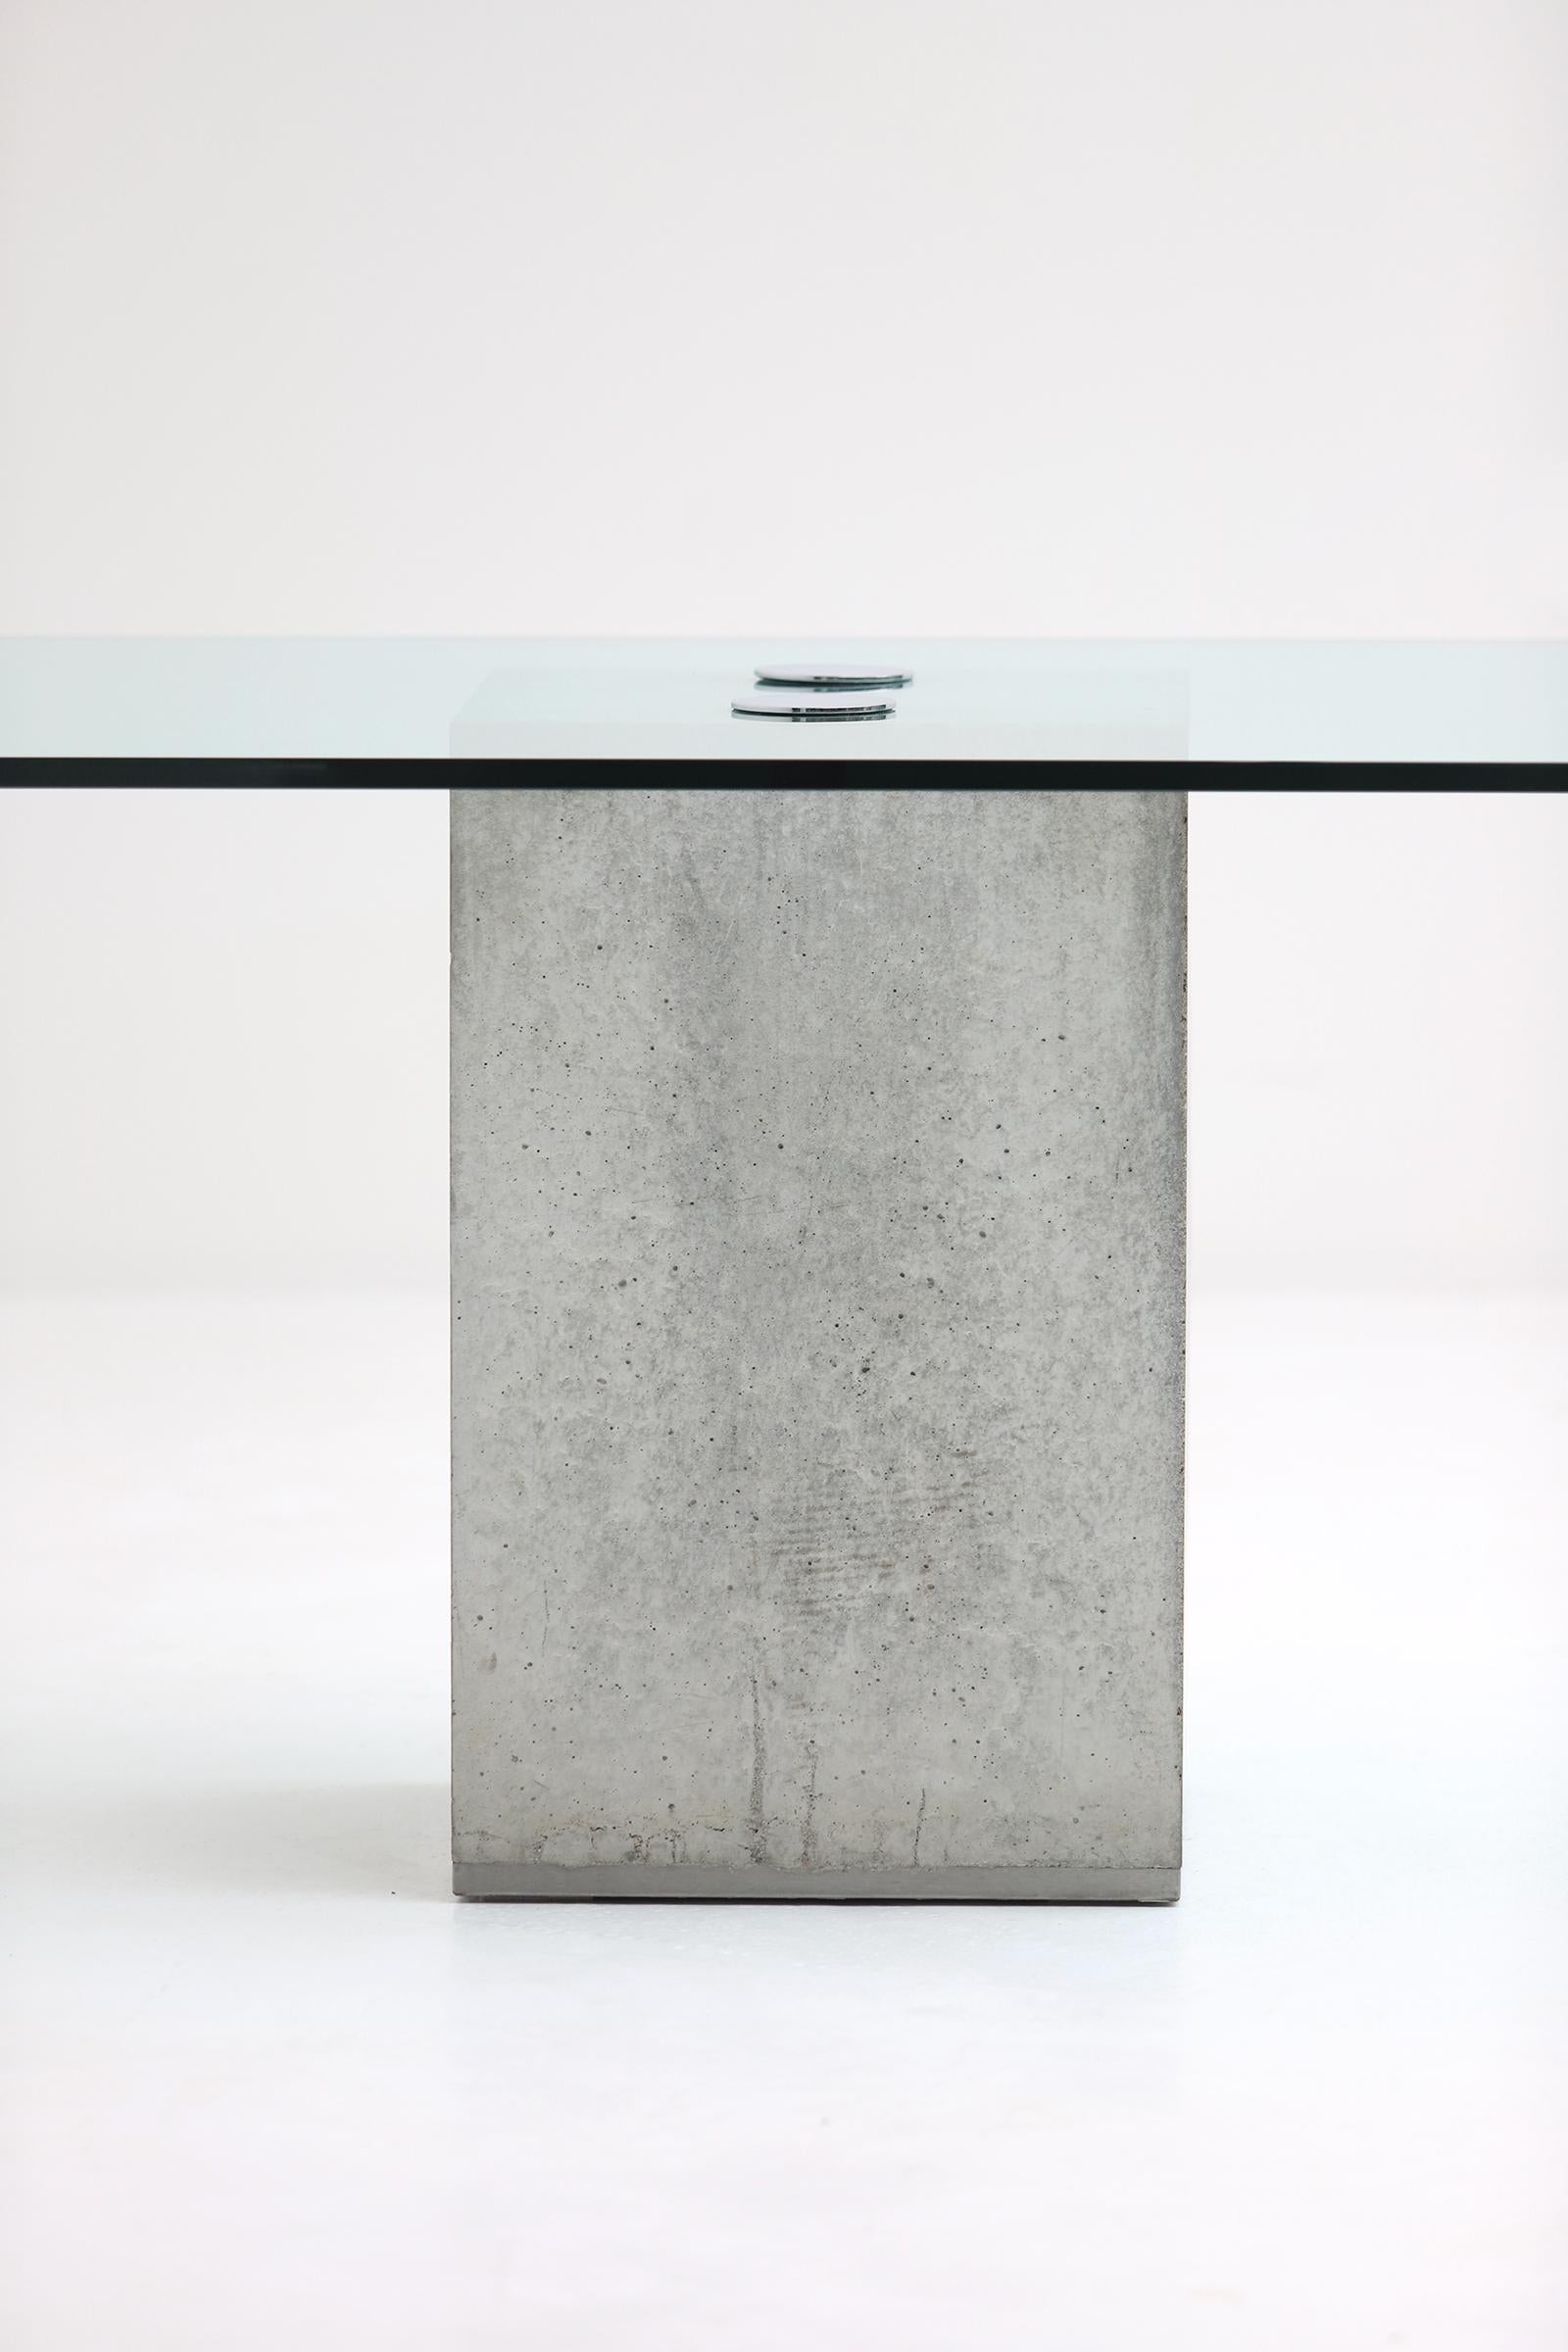 Concrete Minimalist Sapo Dining Table by Sergio and Giorgio Saporiti for Saporiti, Italy